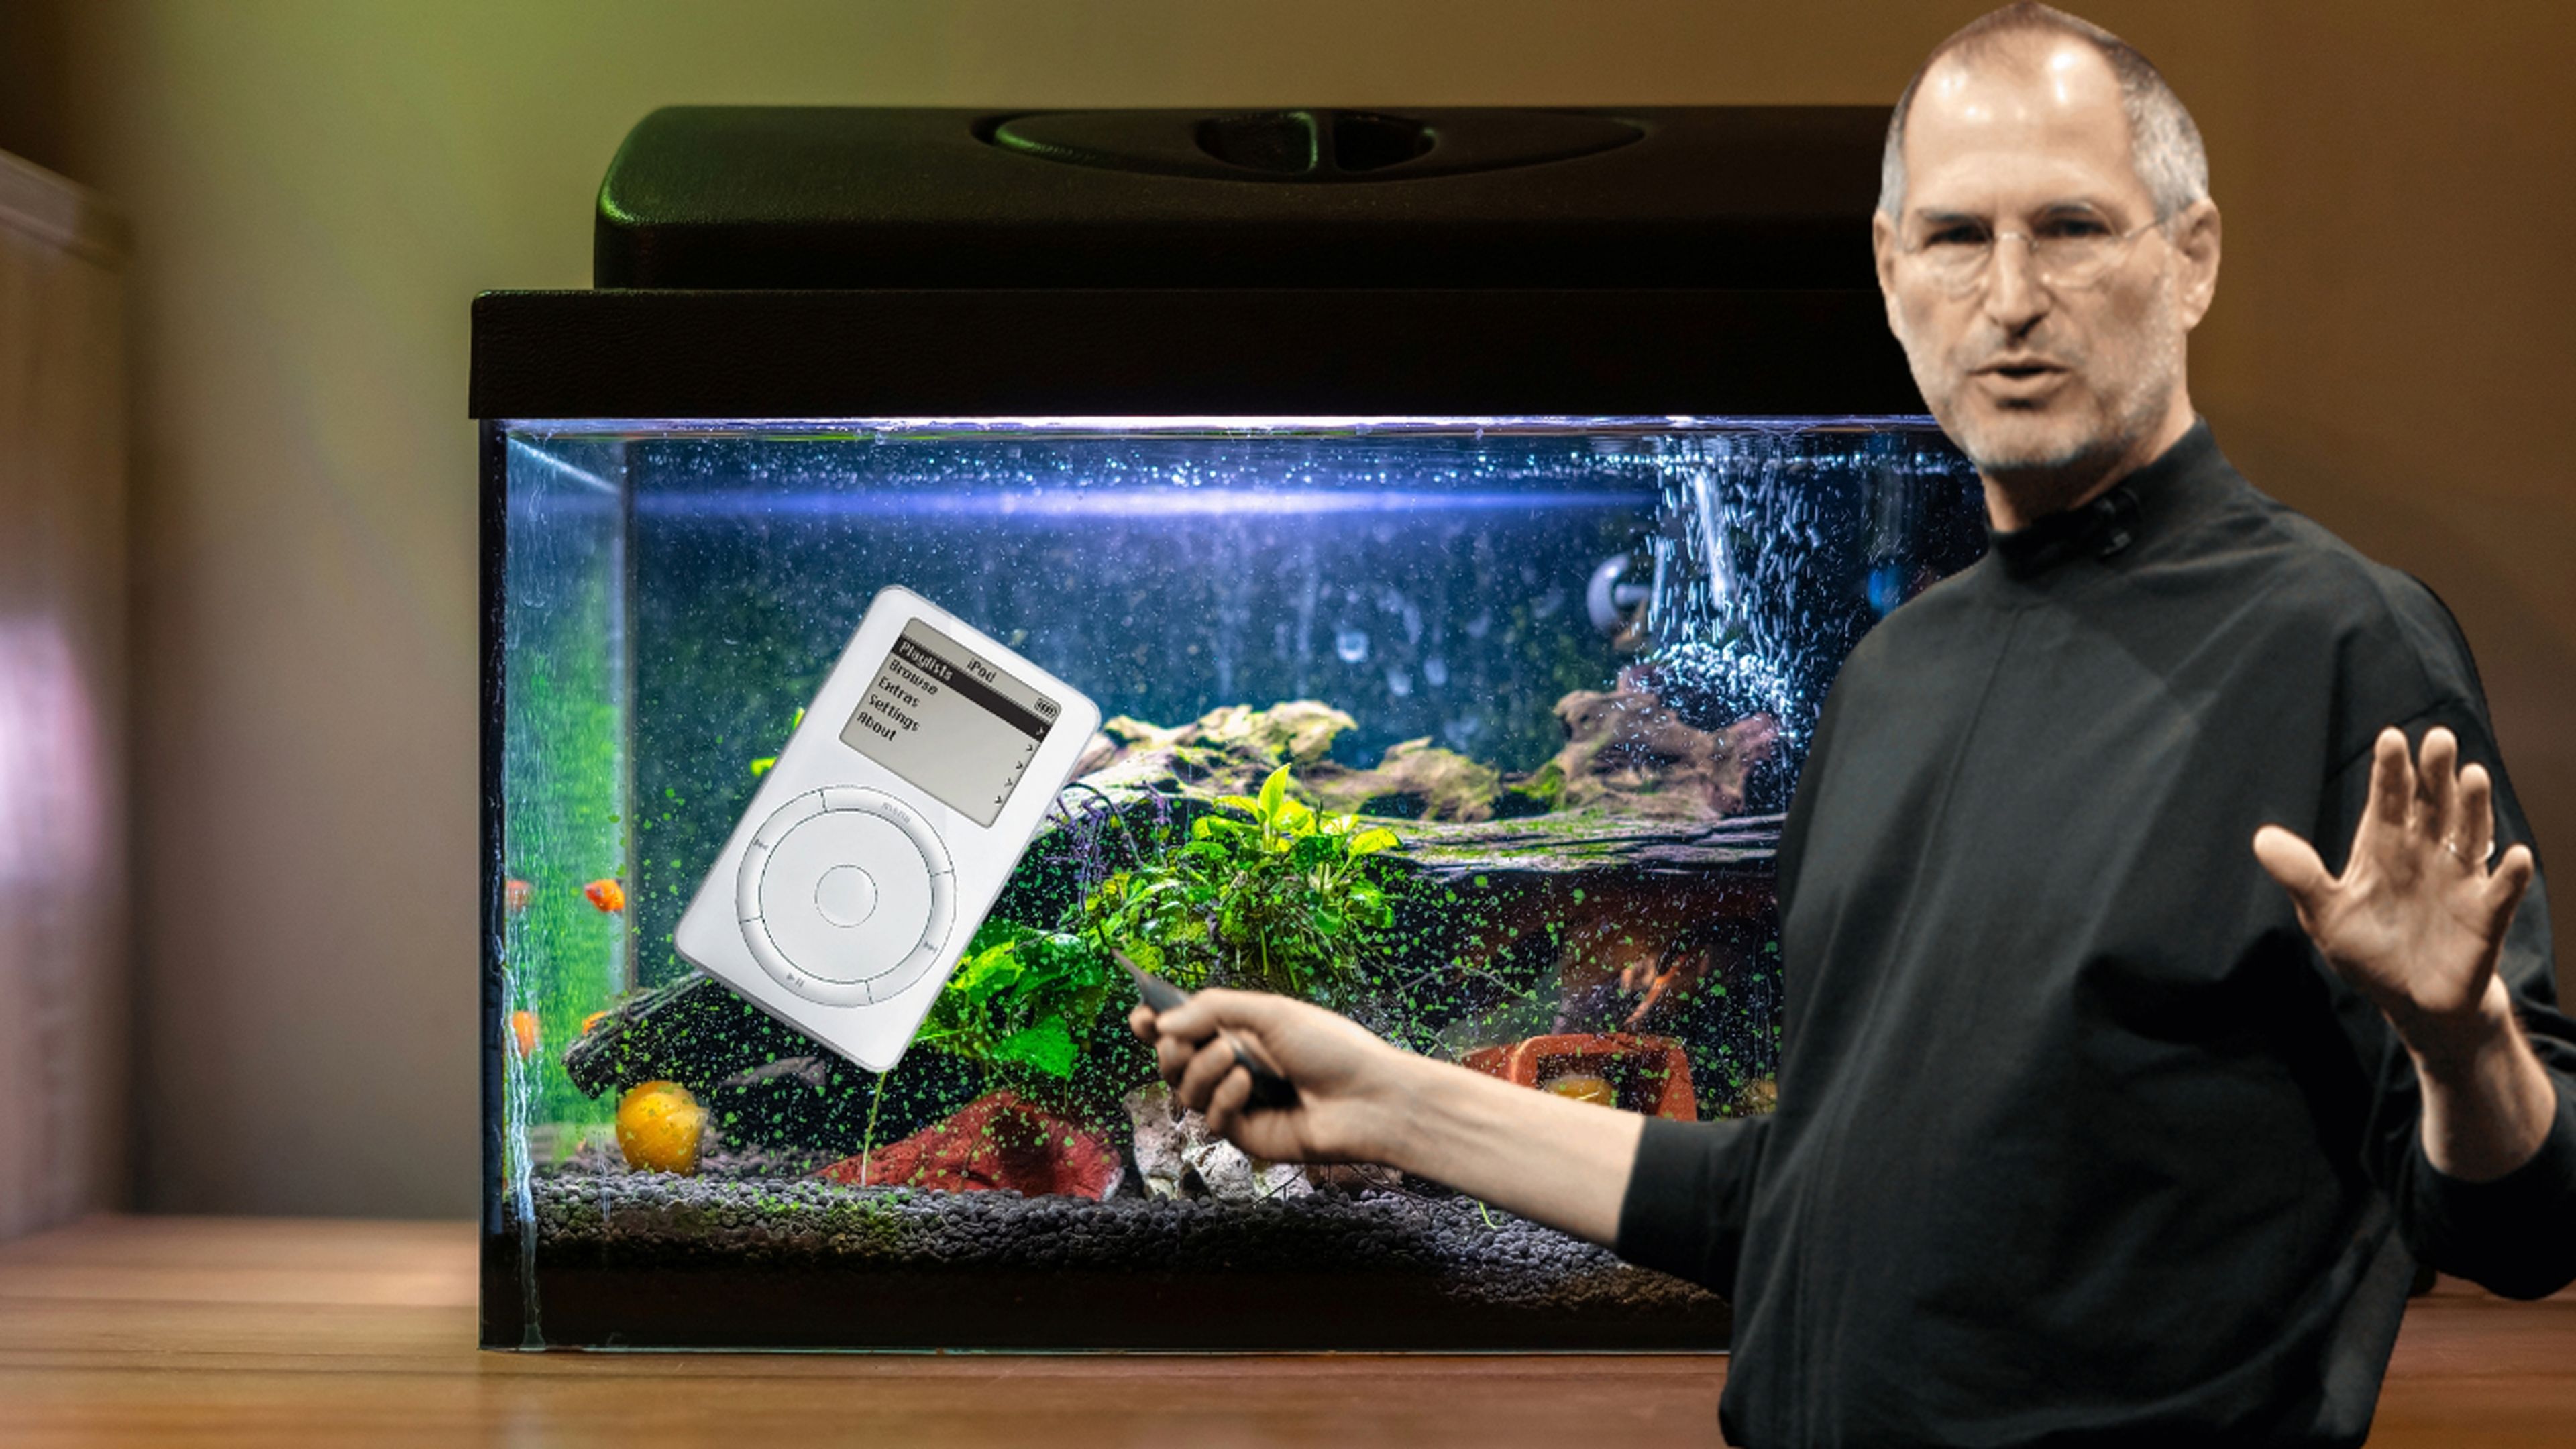 iPod Steve Jobs